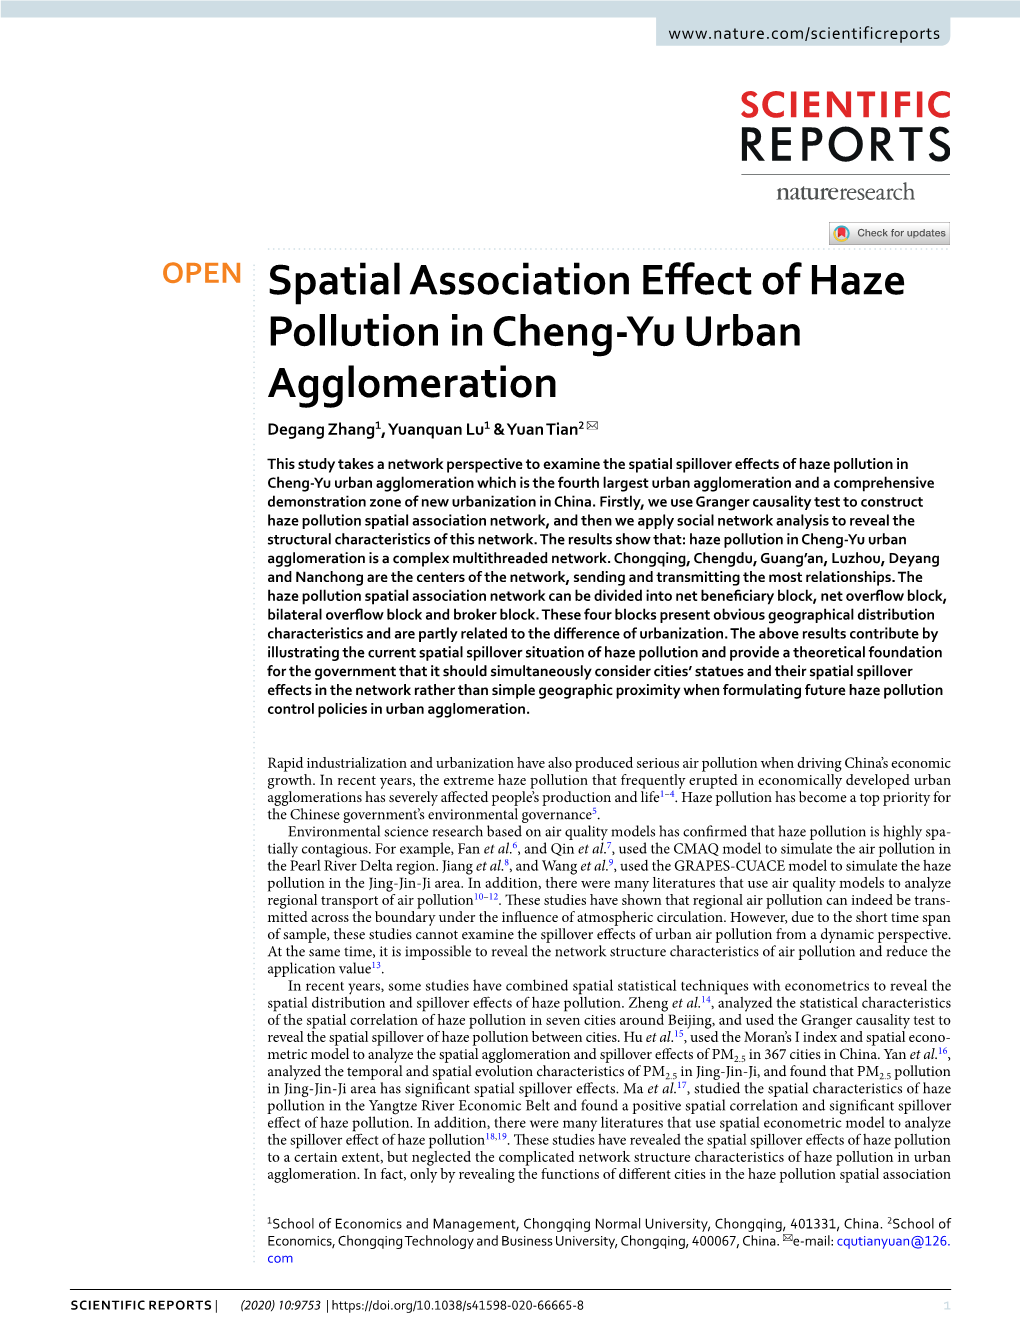 Spatial Association Effect of Haze Pollution in Cheng-Yu Urban